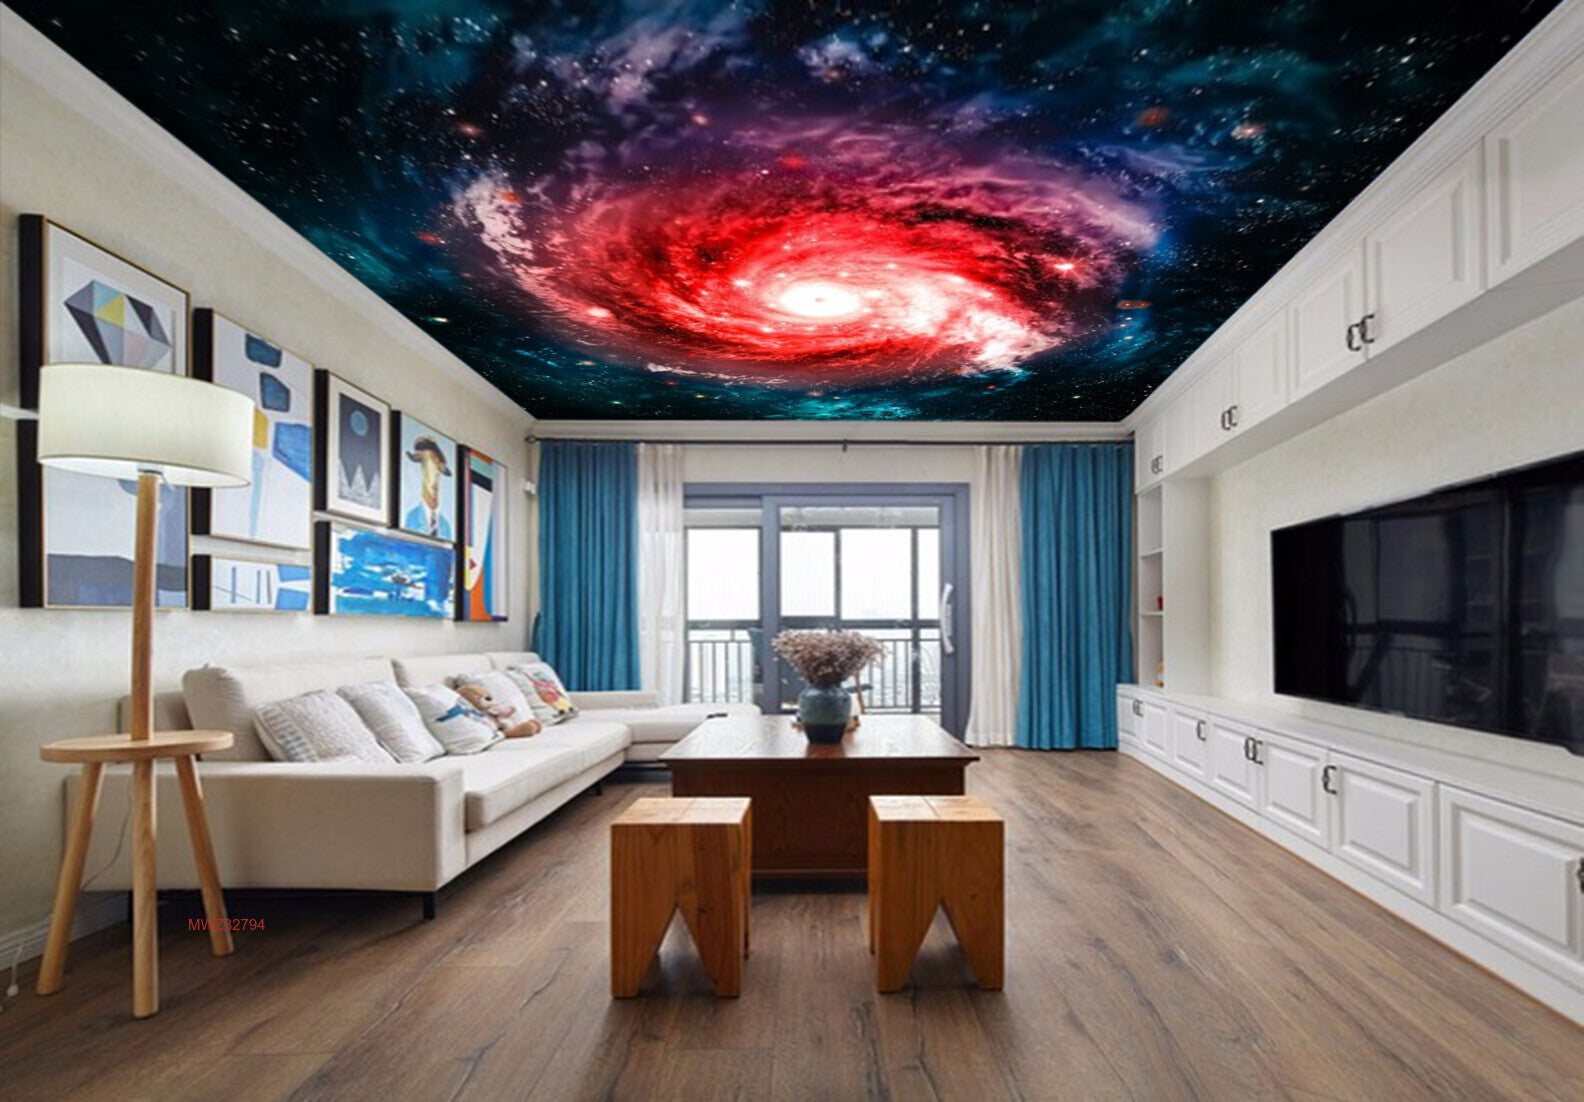 Avikalp MWZ3279 Sun Moon Stars Galaxy HD Wallpaper for Ceiling